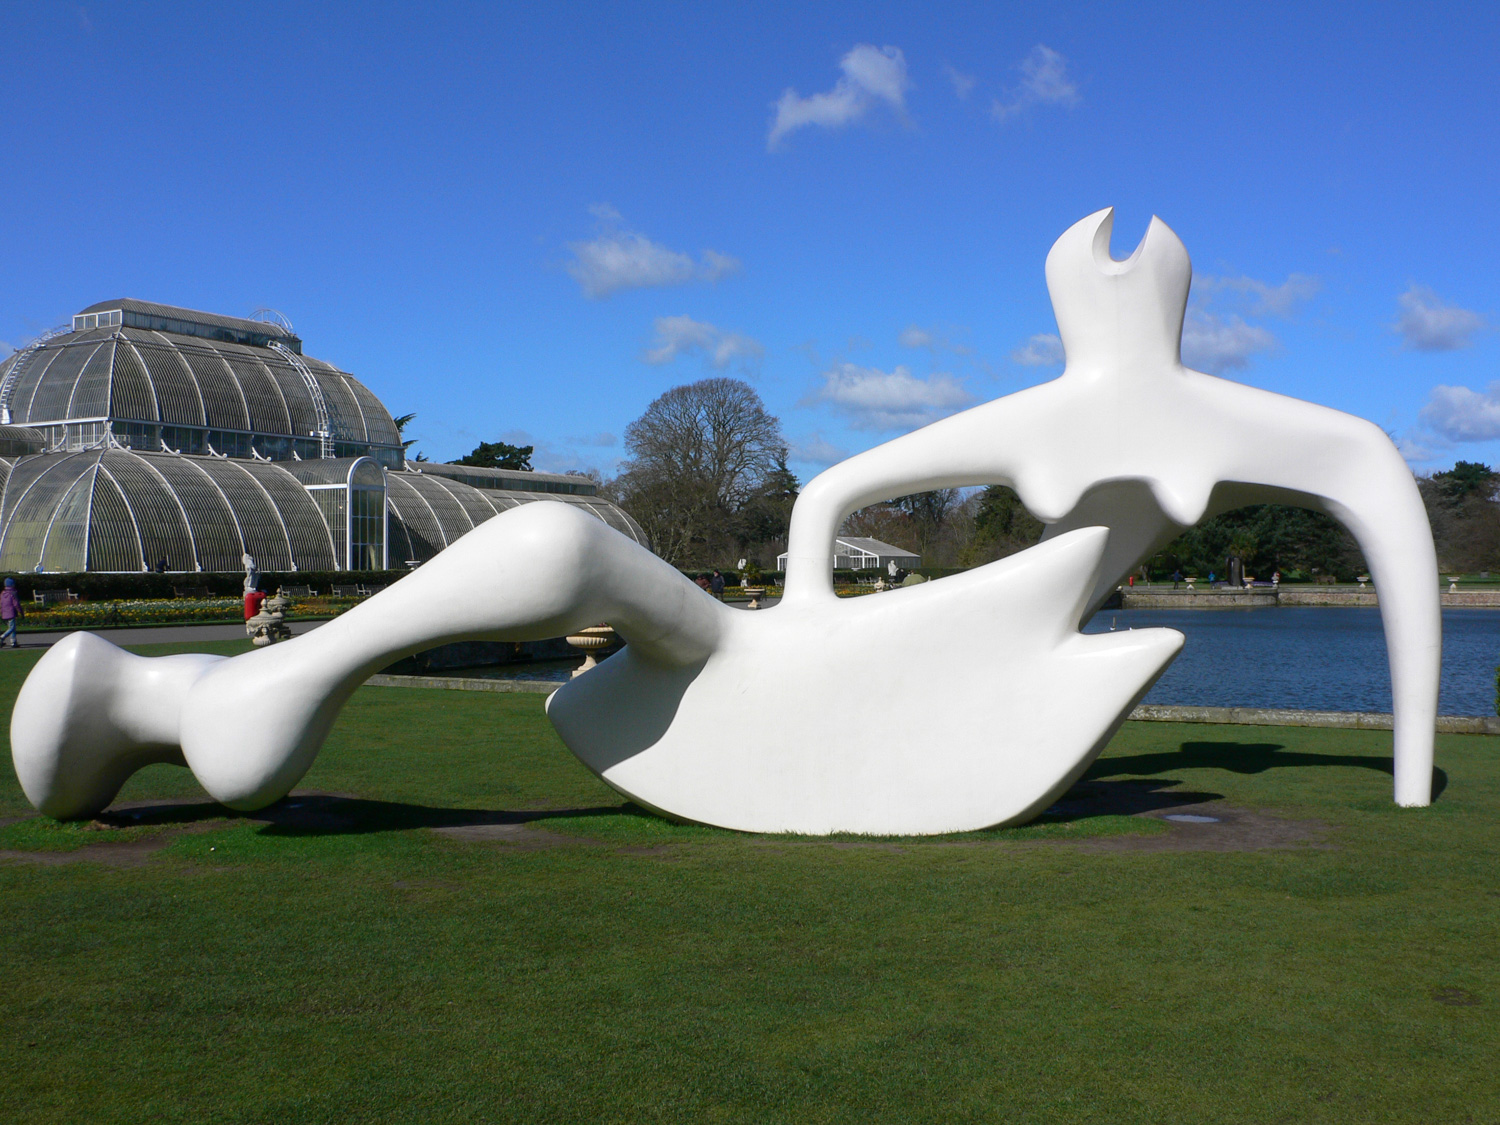 Henry Moore sculpture at Kew Gardens